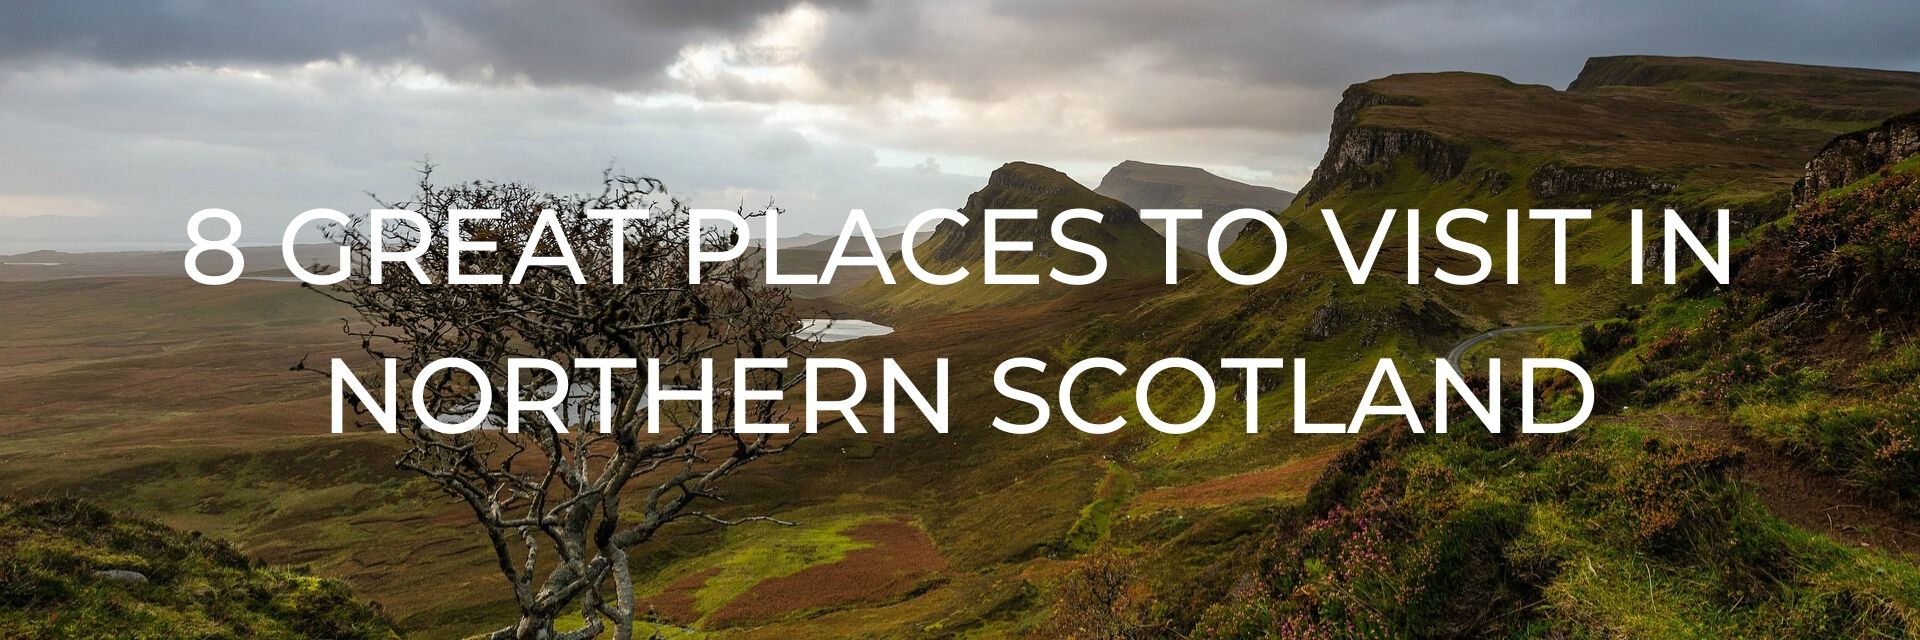 8 Great Places to Visit in Northern Scotland Desktop Header